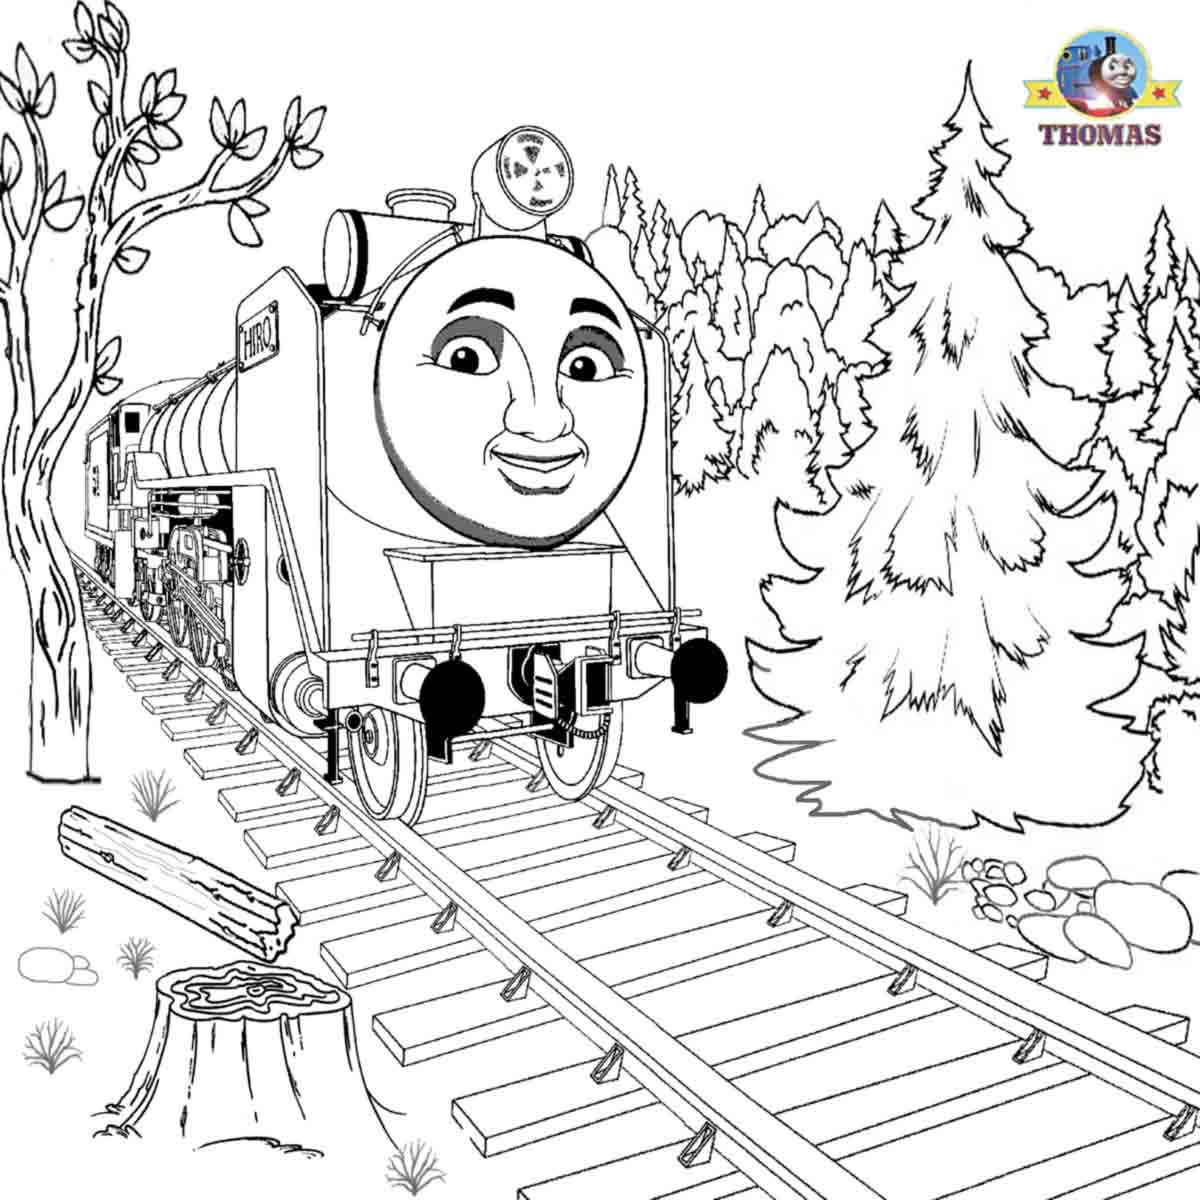 Fun railroad transport clip art free cartoons for boys Thomas Hiro coloring book printables to color